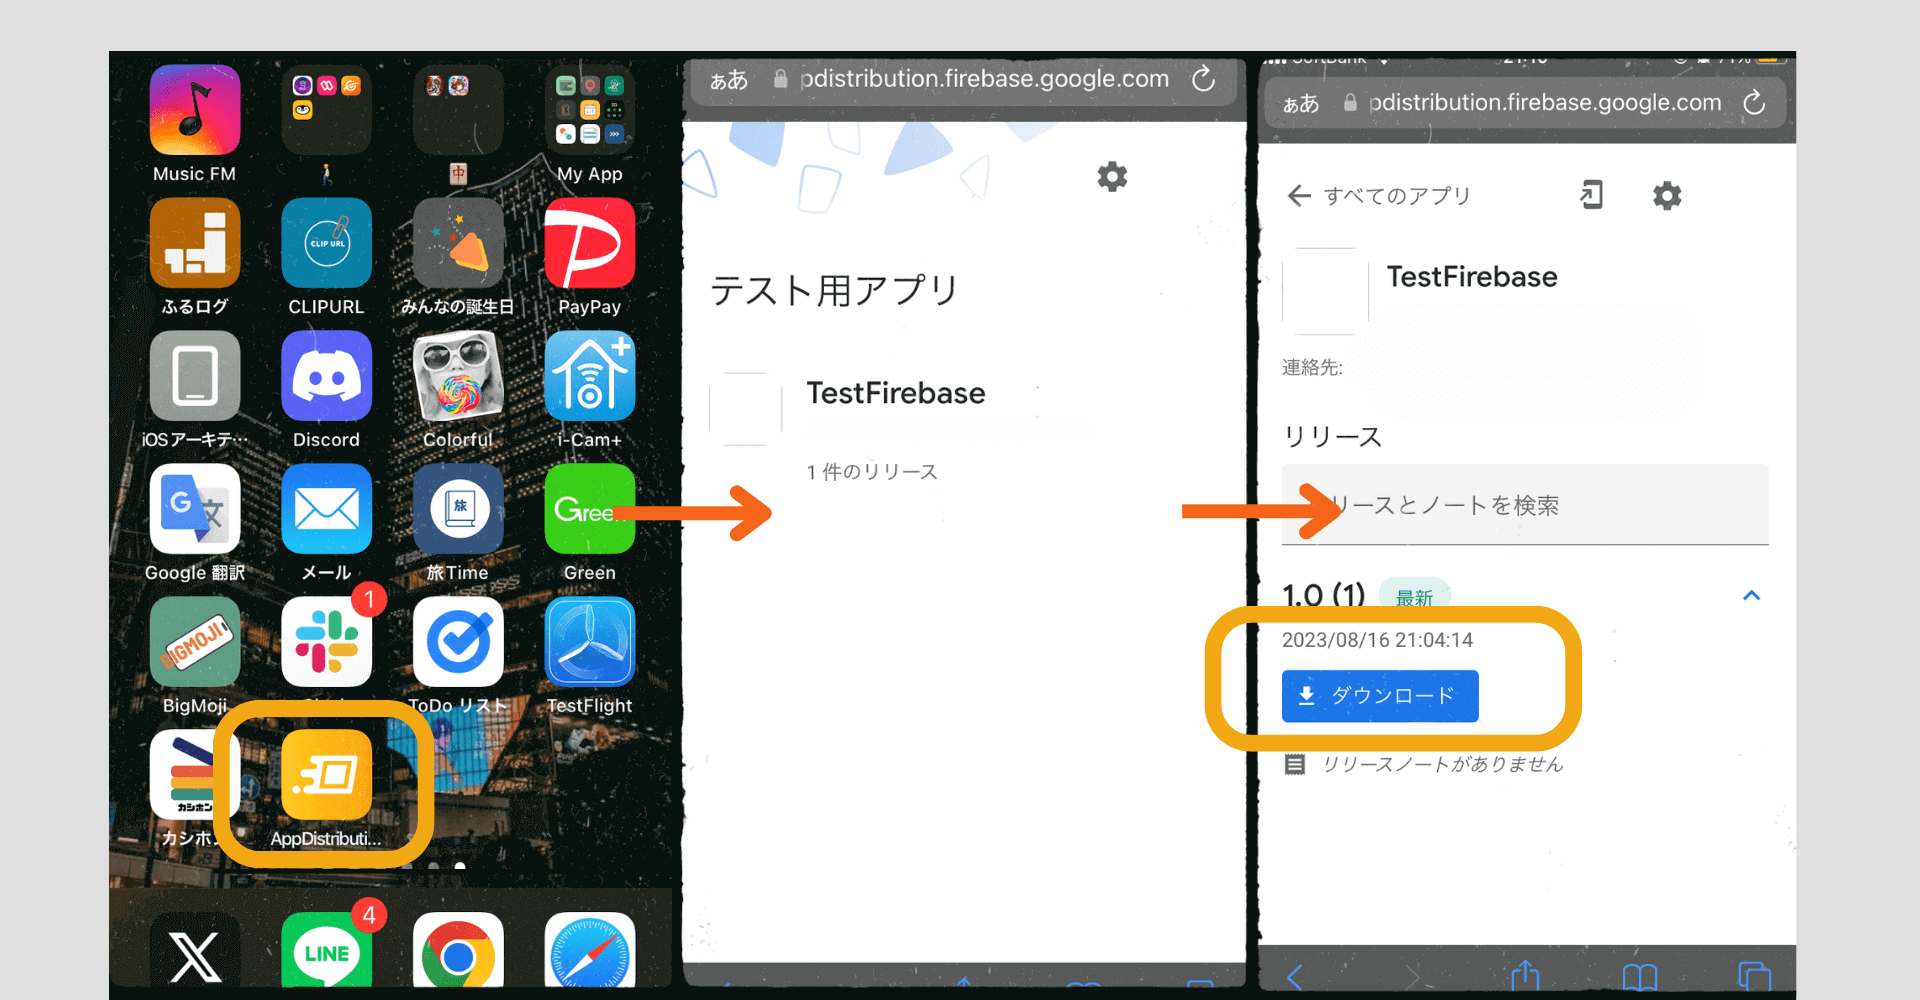 【Firebase】App Distributionの使い方！iOSアプリをテスターに配布する方法